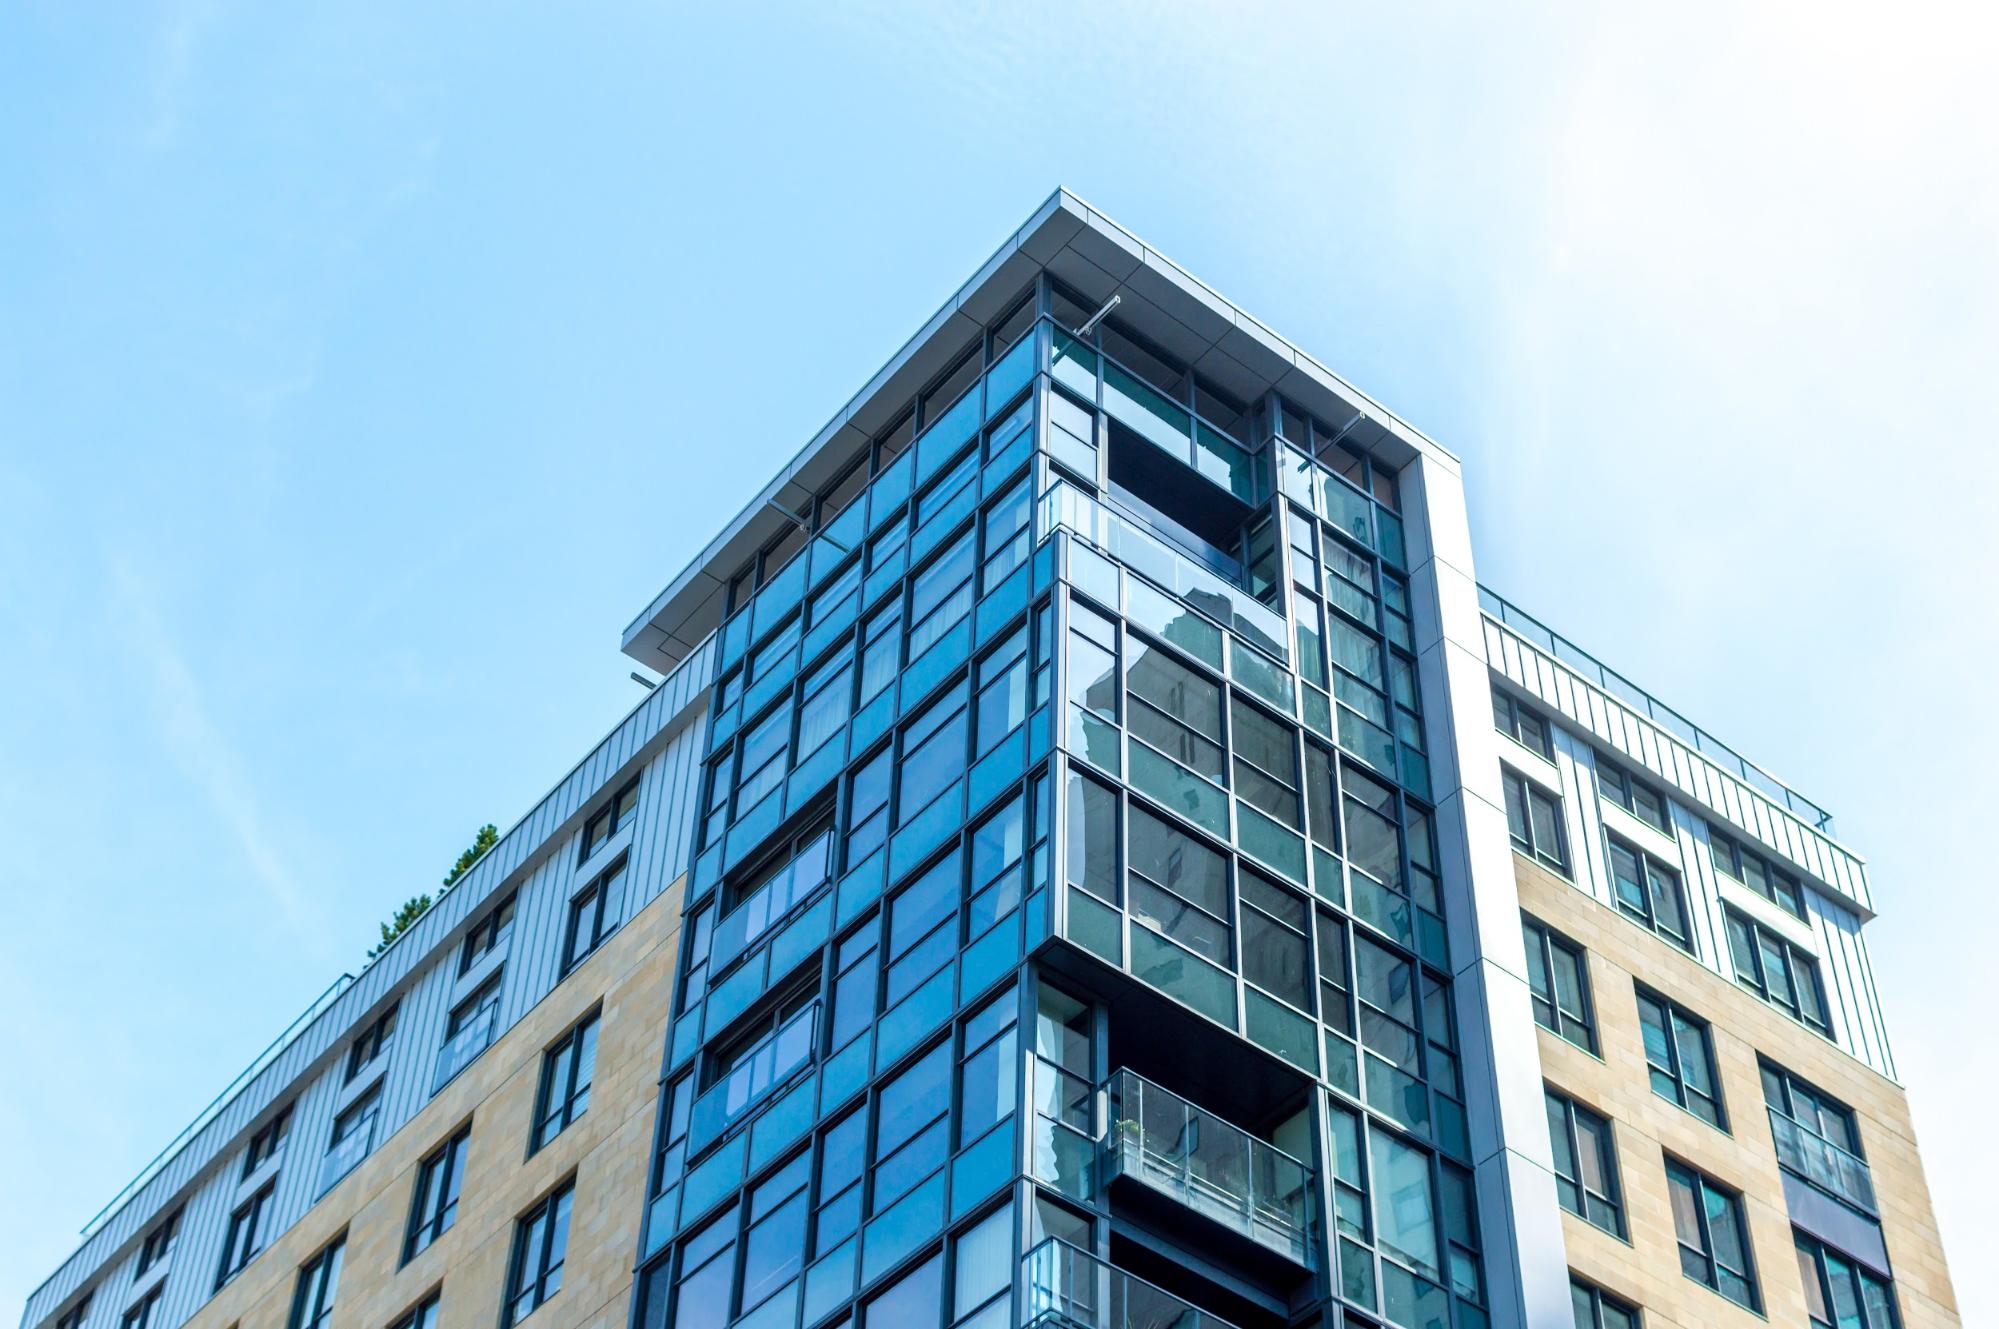 A condominium building against a blue sky